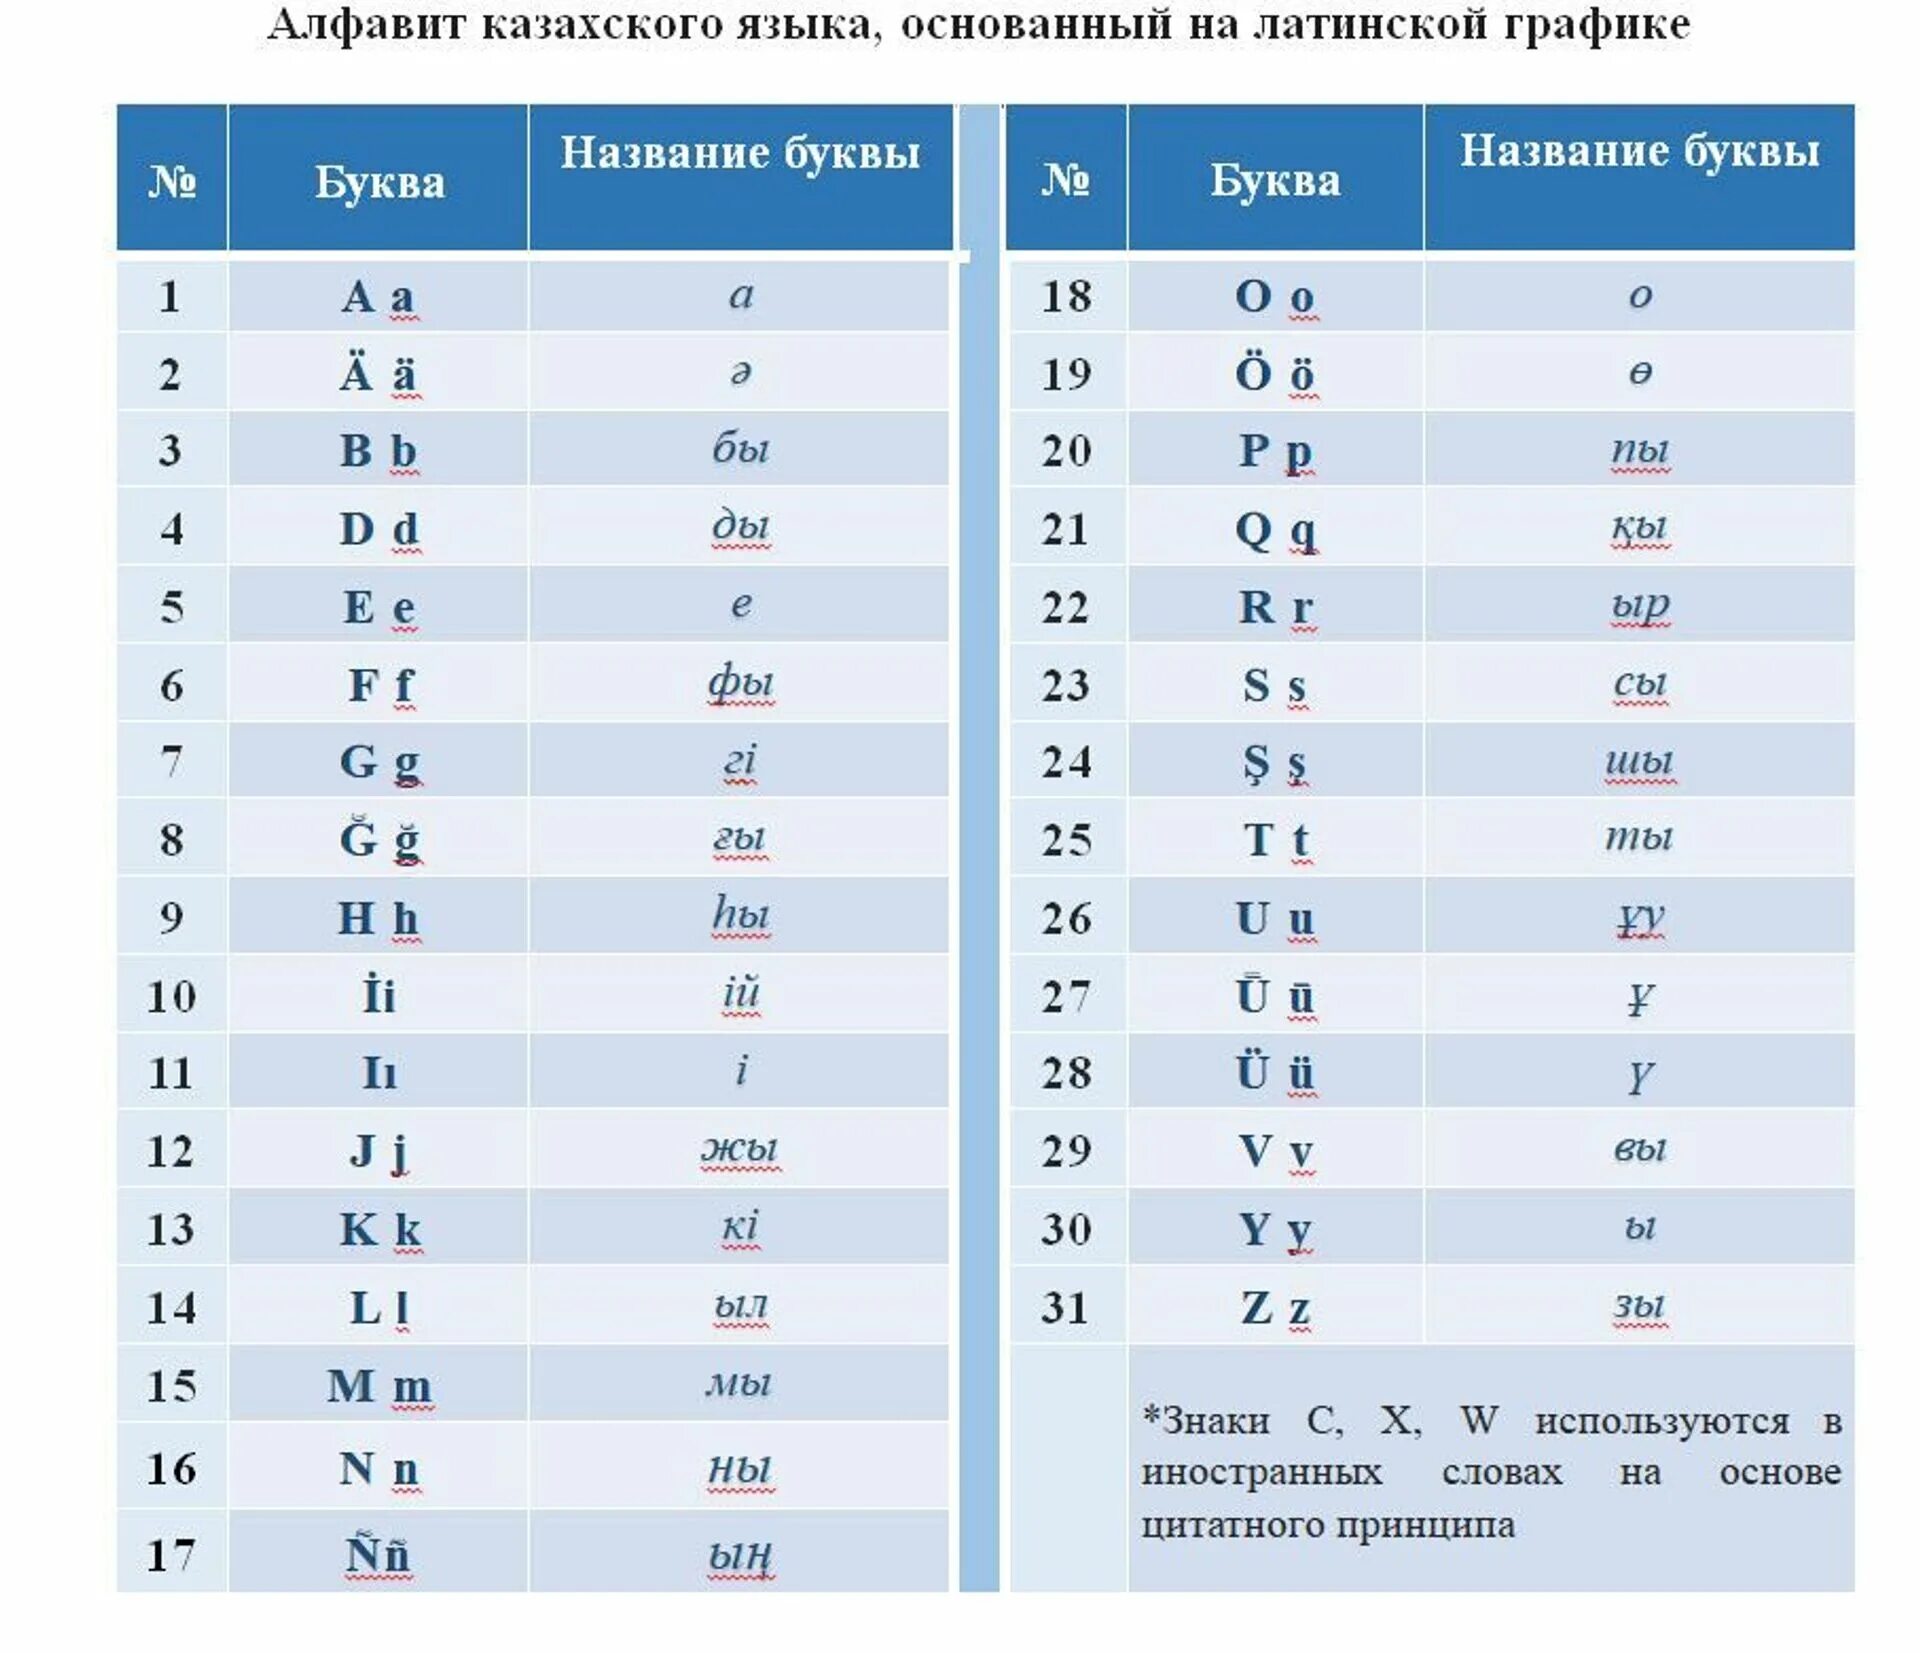 Где латинский алфавит. Казахский алфавит. Казахский алфавит латиница. Латинский алфавит казахского языка. Новый алфавит казахского языка.